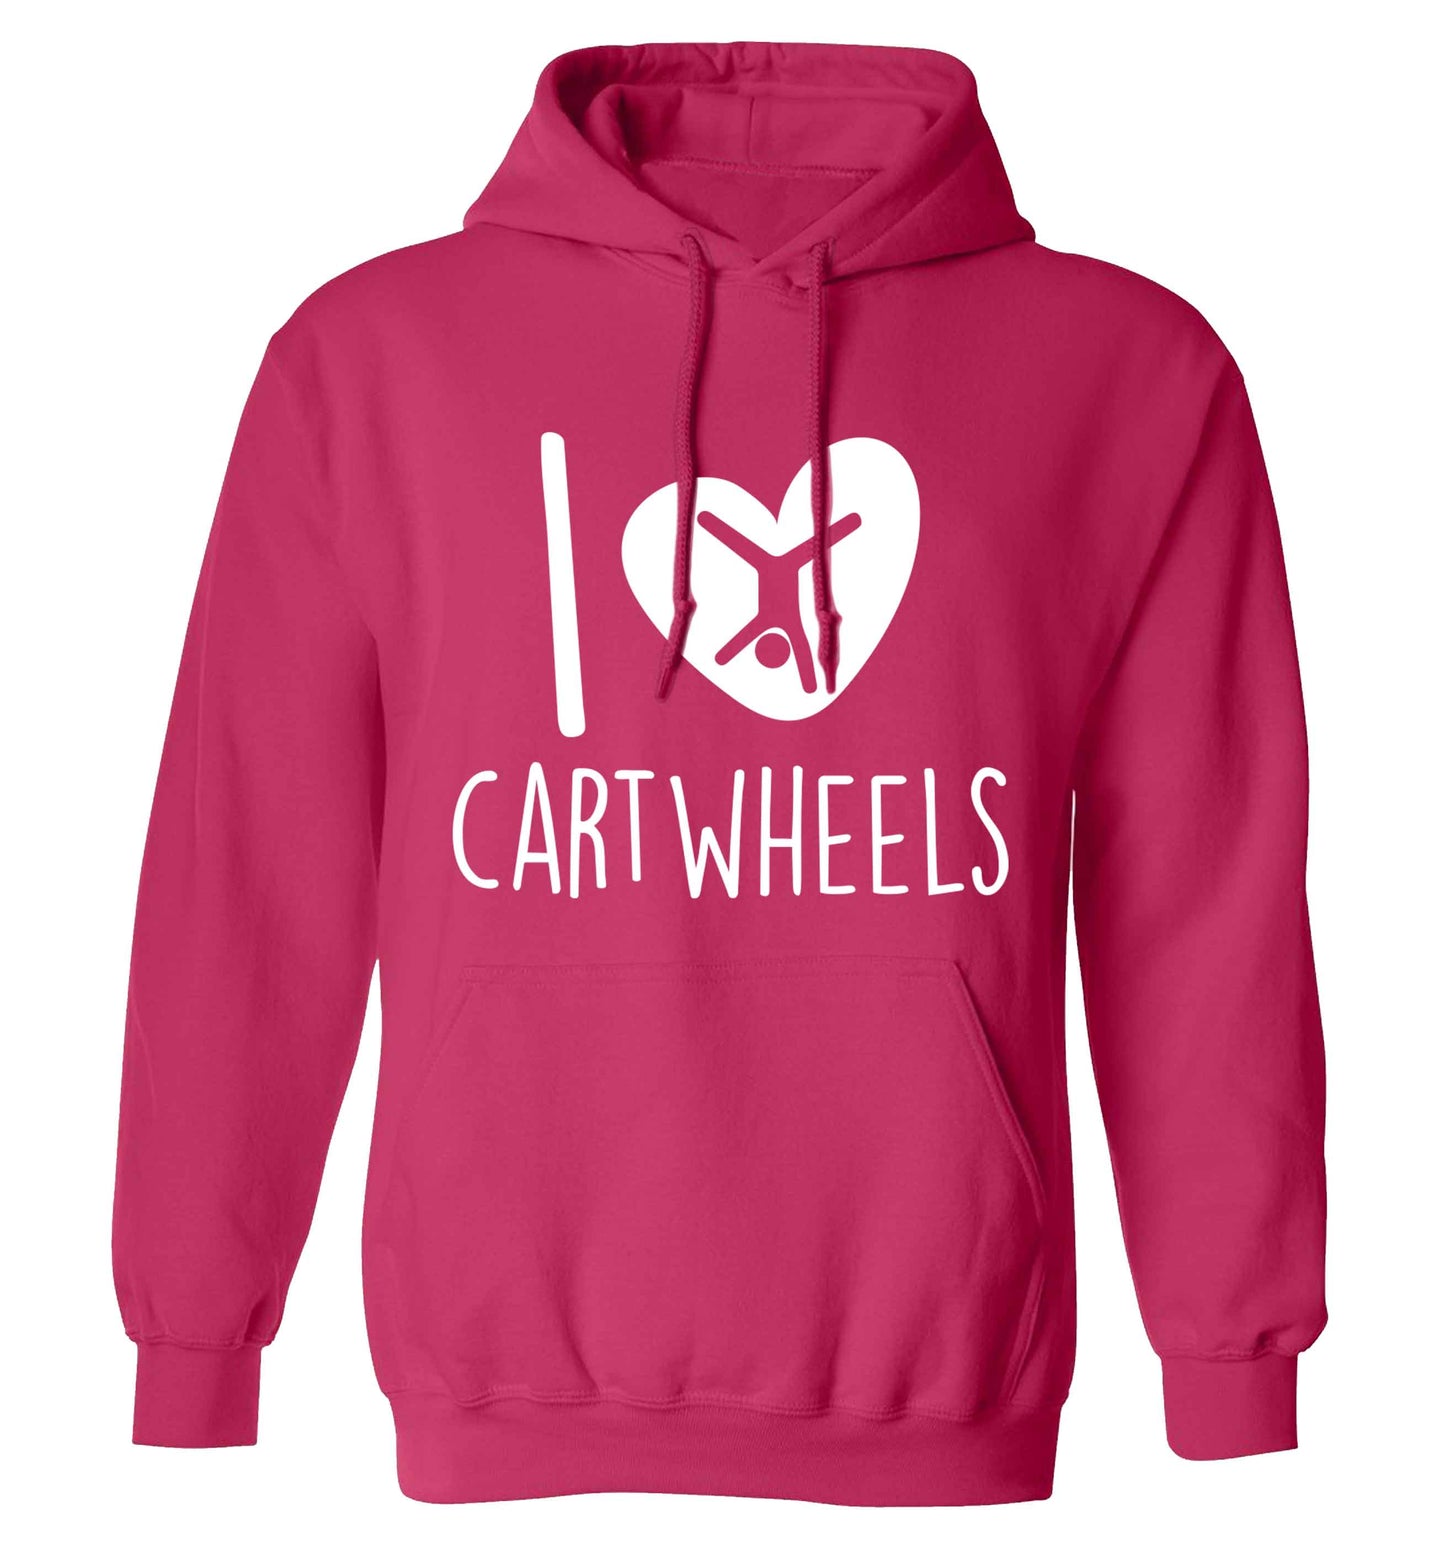 I love cartwheels adults unisex pink hoodie 2XL